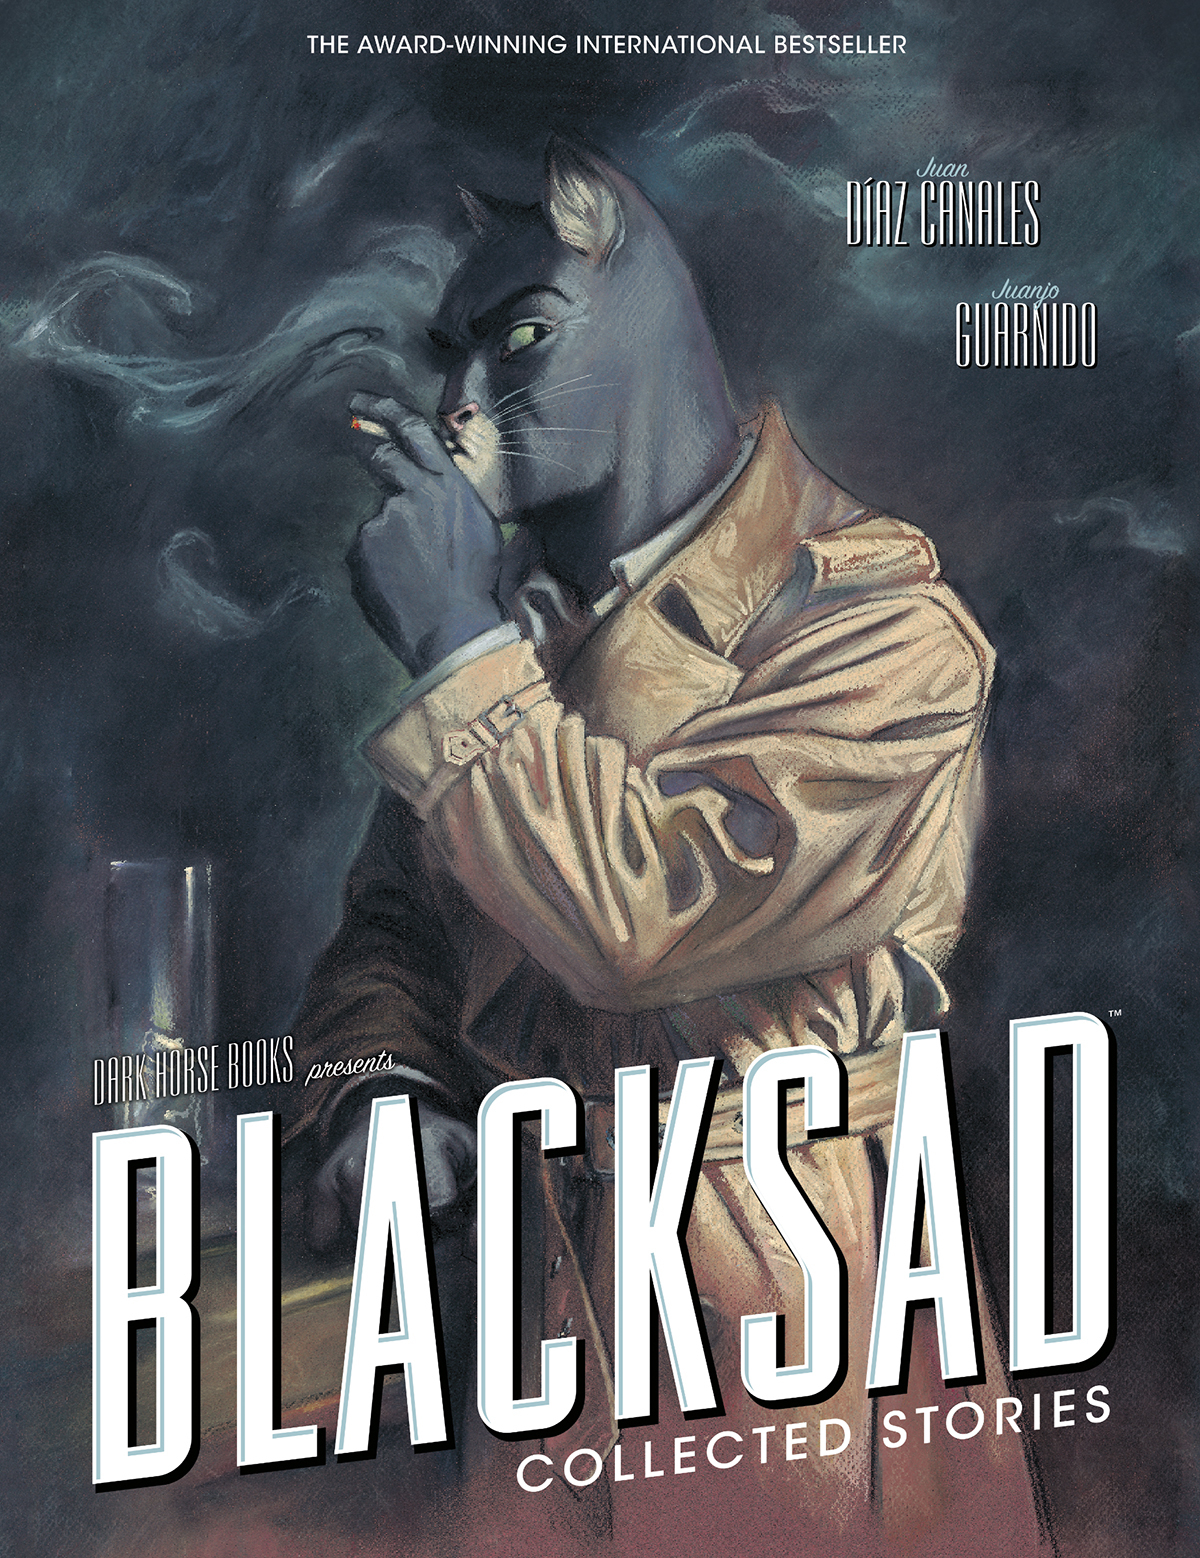 Blacksad Collected Stories Graphic Novel Volume 1